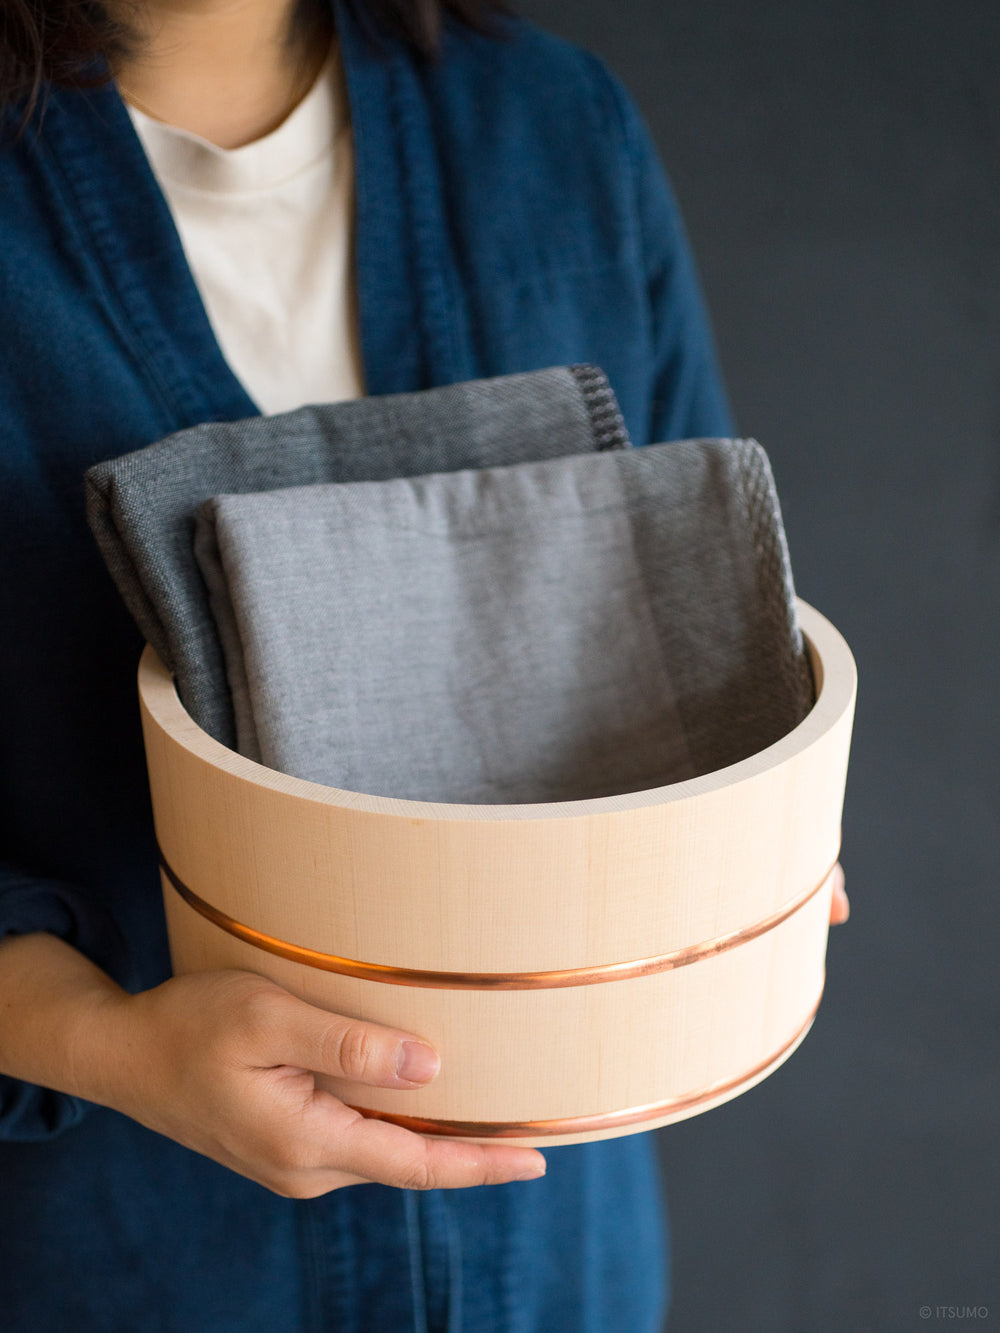 Hands holding an Azmaya hinoki wood bath bowl with towels inside